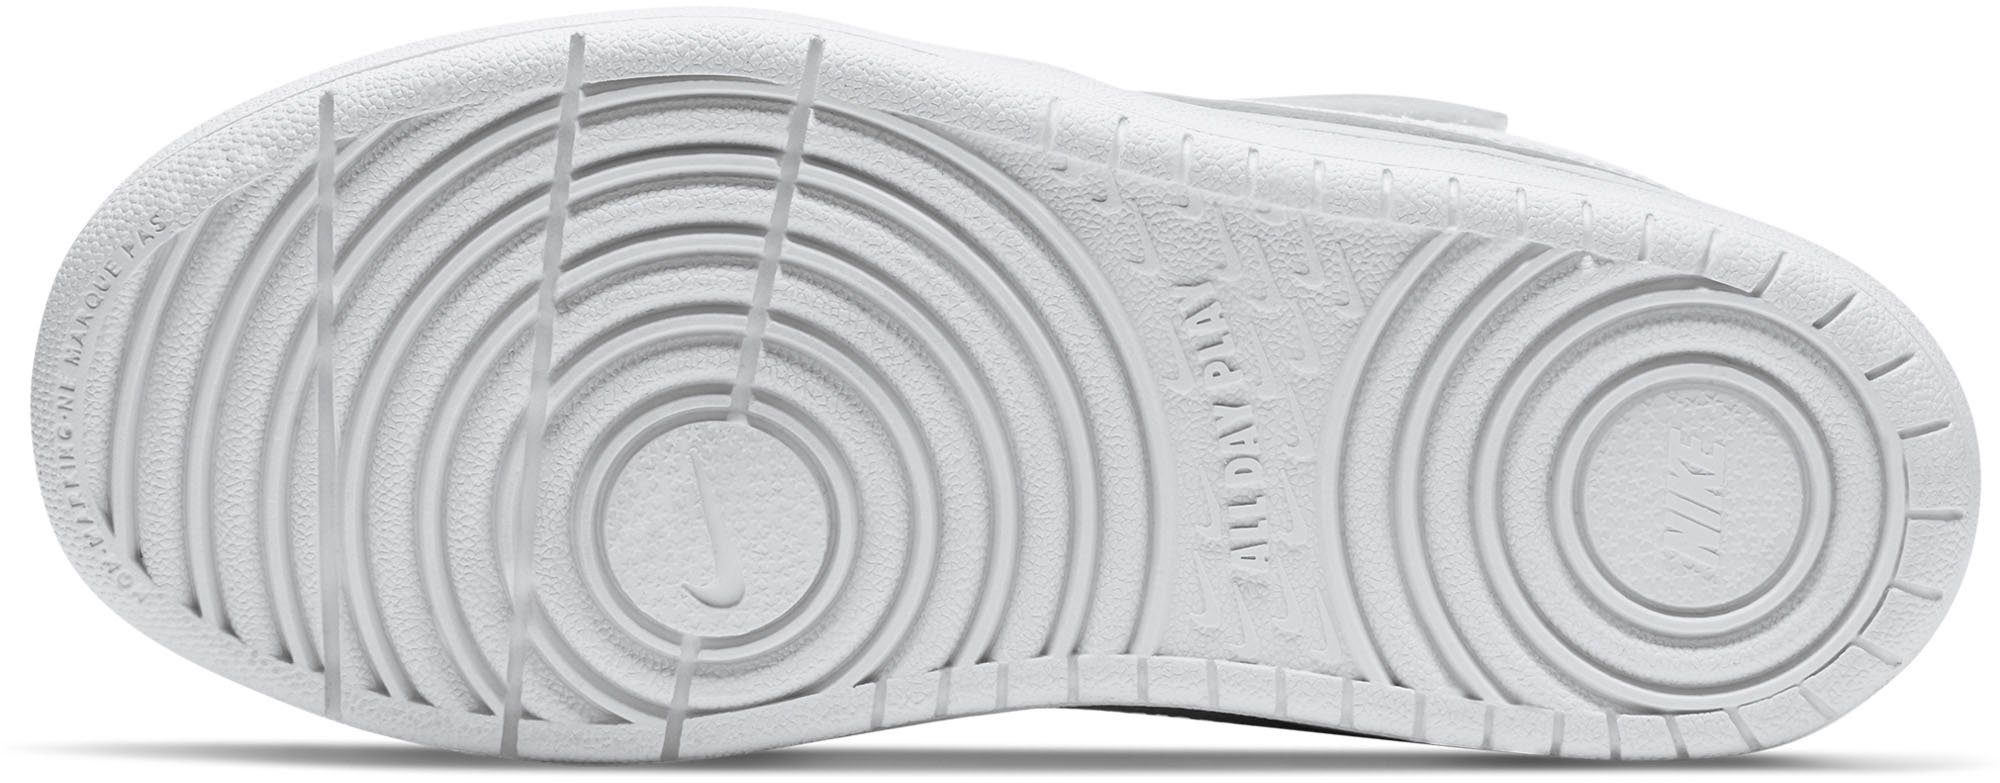 Nike Sportswear COURT 2 Air 1 BOROUGH den Spuren Force LOW auf des Sneaker Design